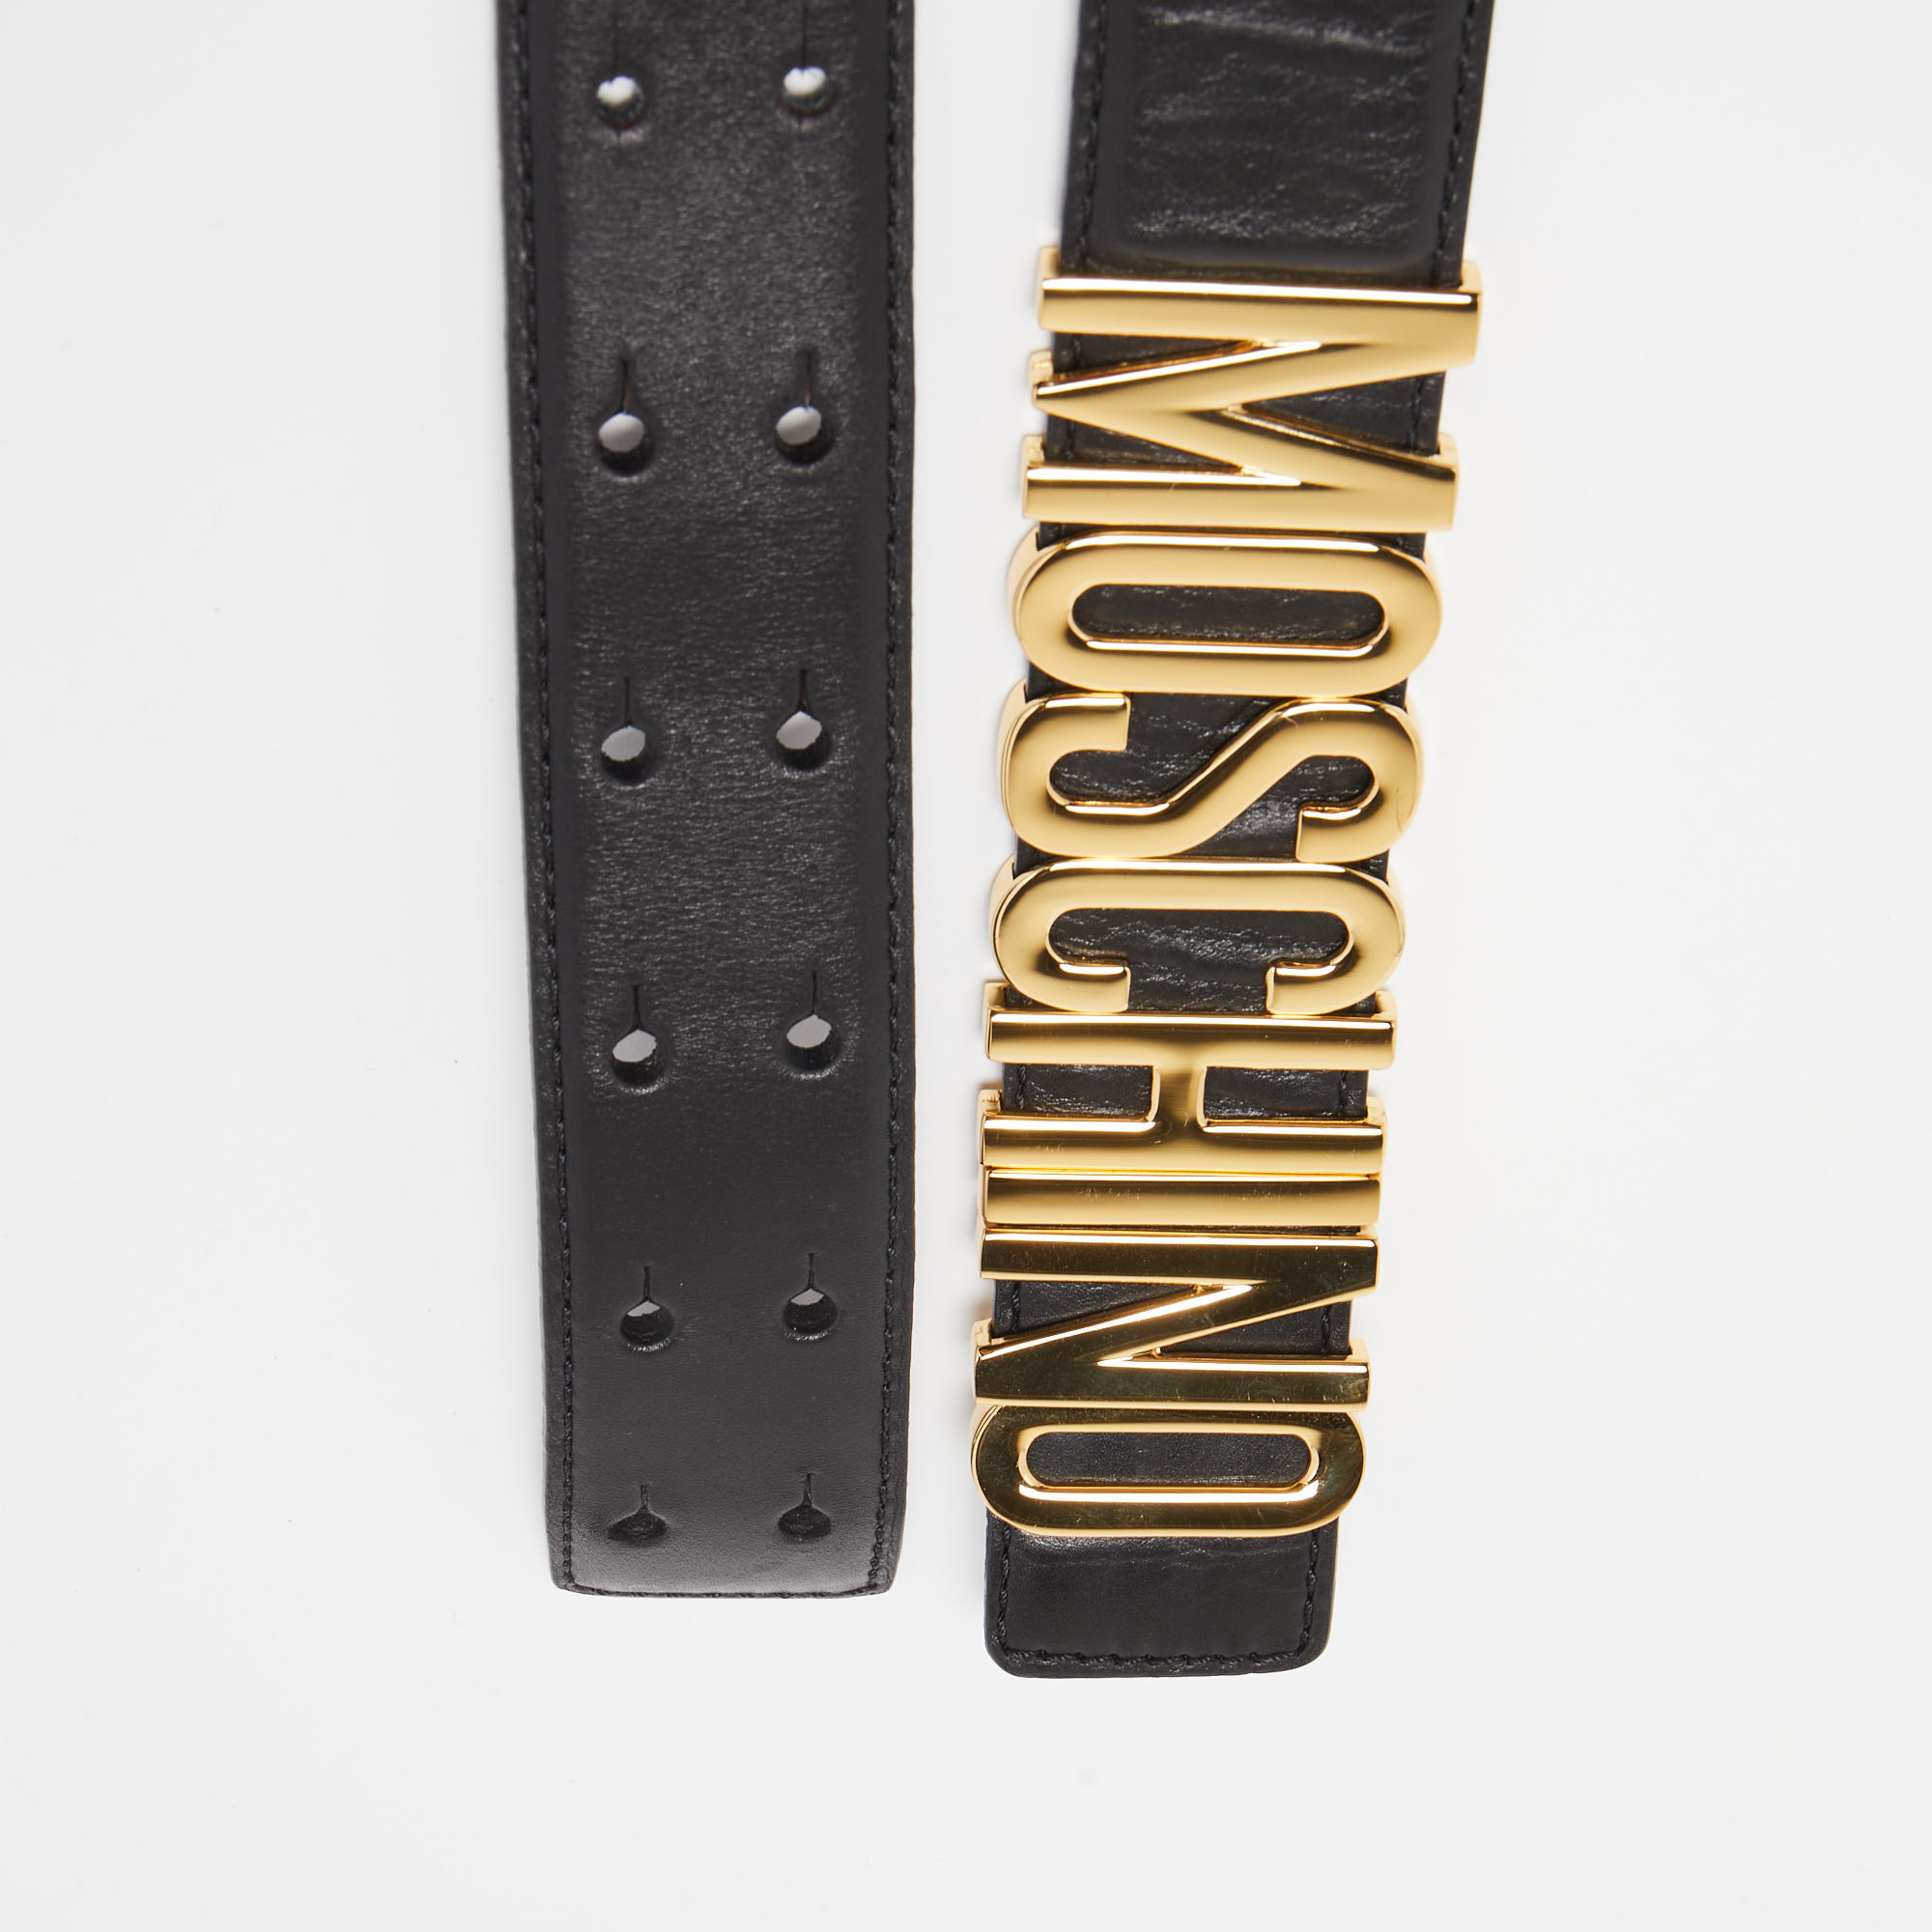 

Moschino Black Leather Classic Logo Belt